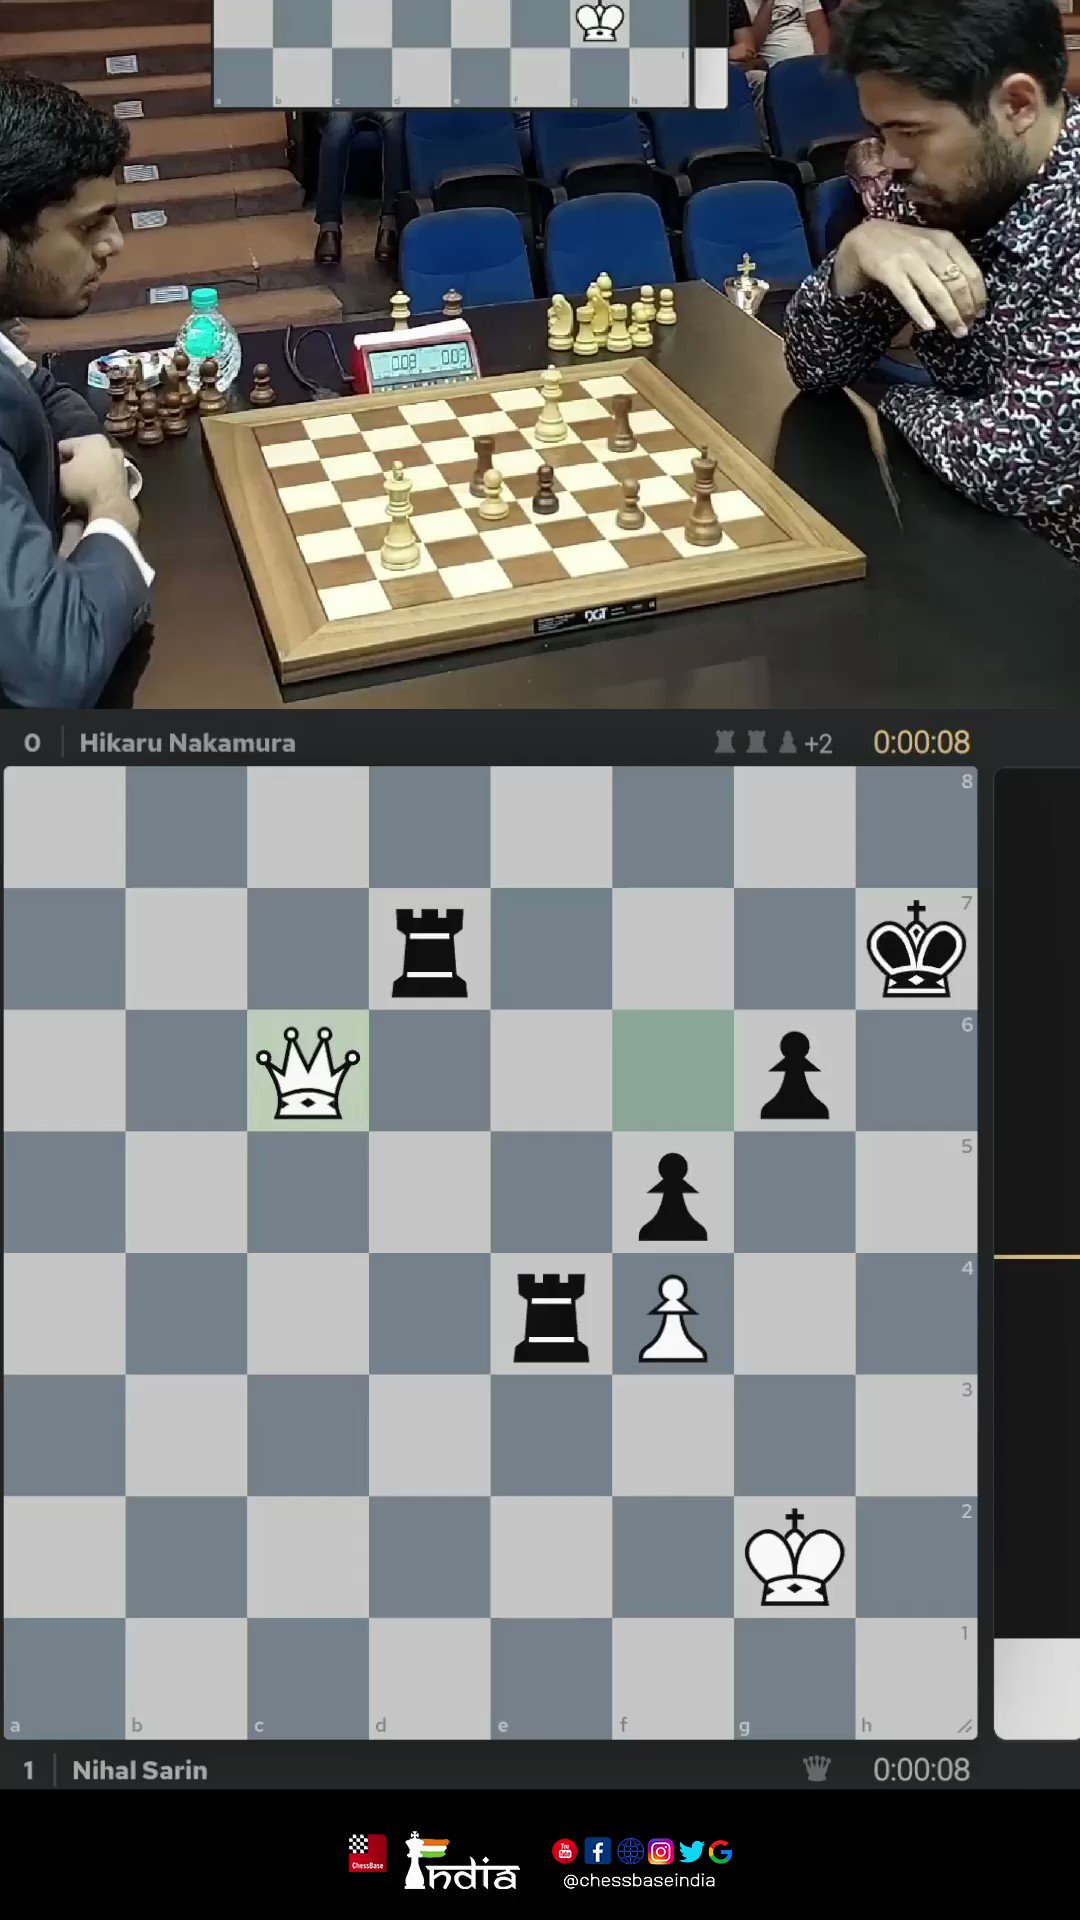 ChessBase India - Video: ChessBase India #Chess